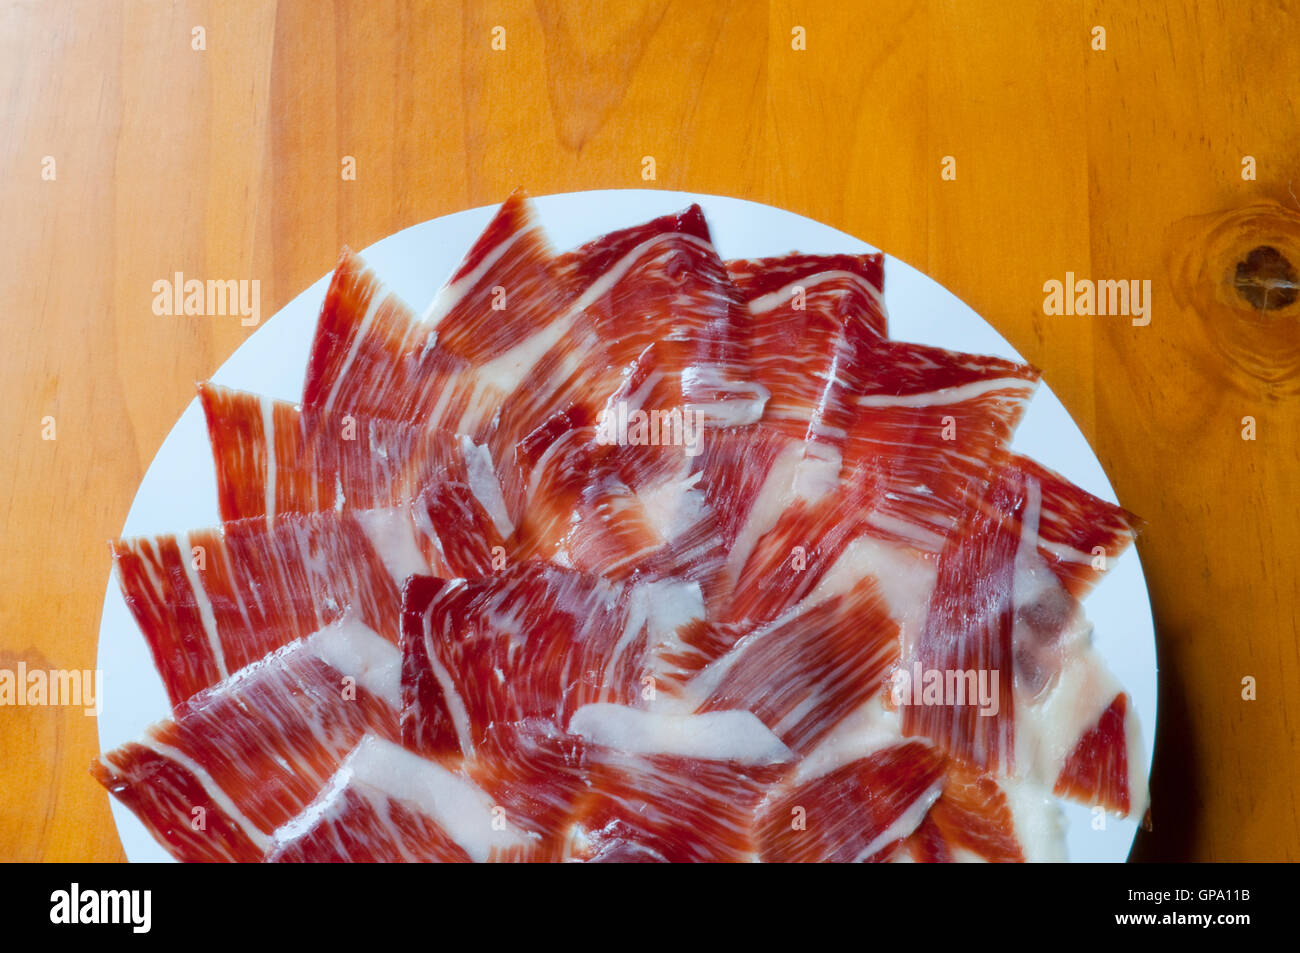 Iberian ham serving. Spain. Stock Photo